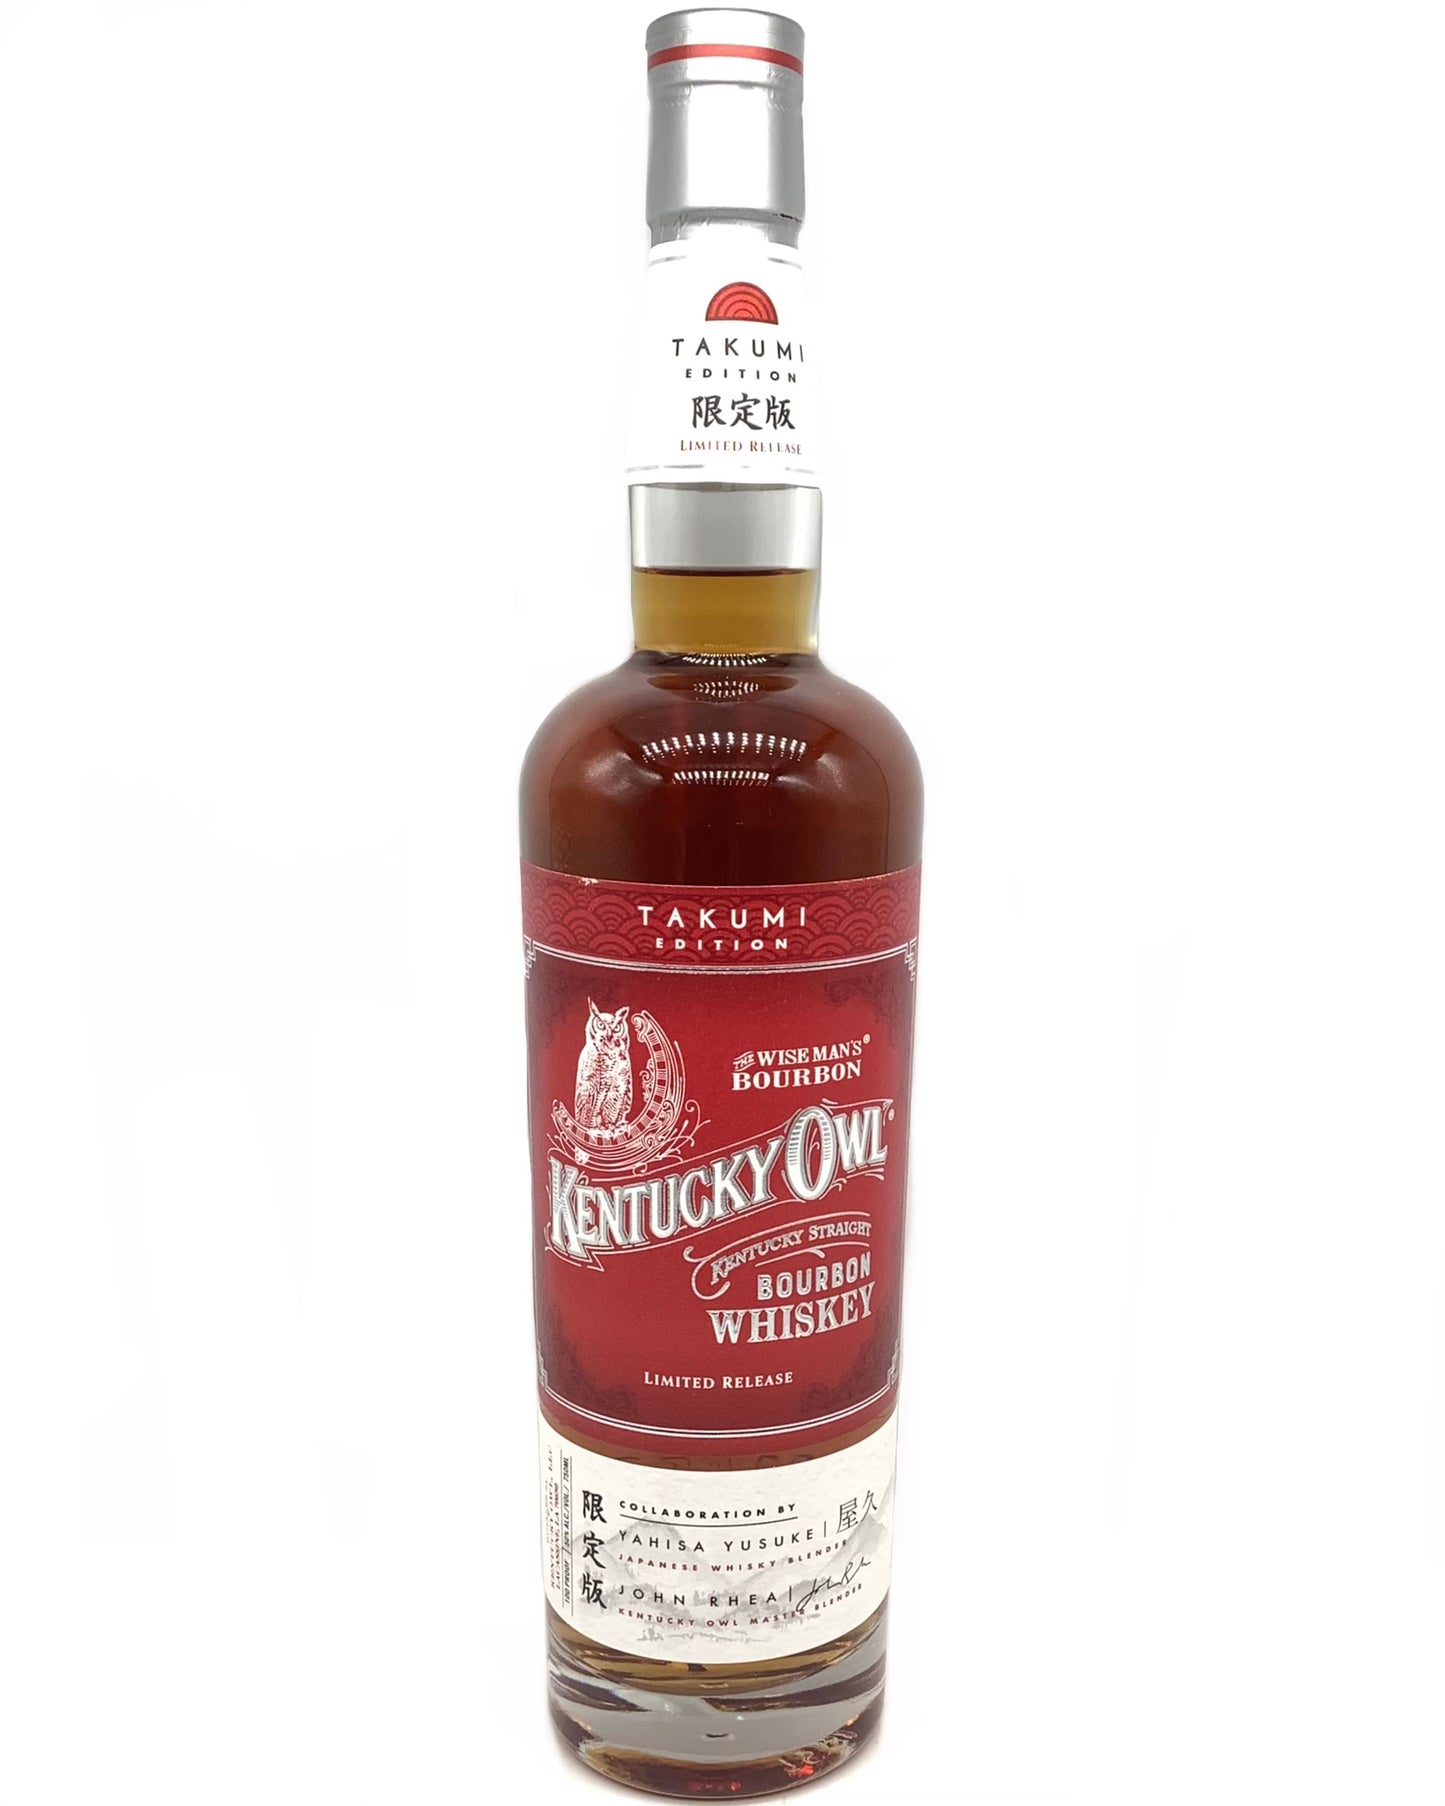 Kentucky Owl, Takumi Edition Bourbon Whiskey 750ml newarrival